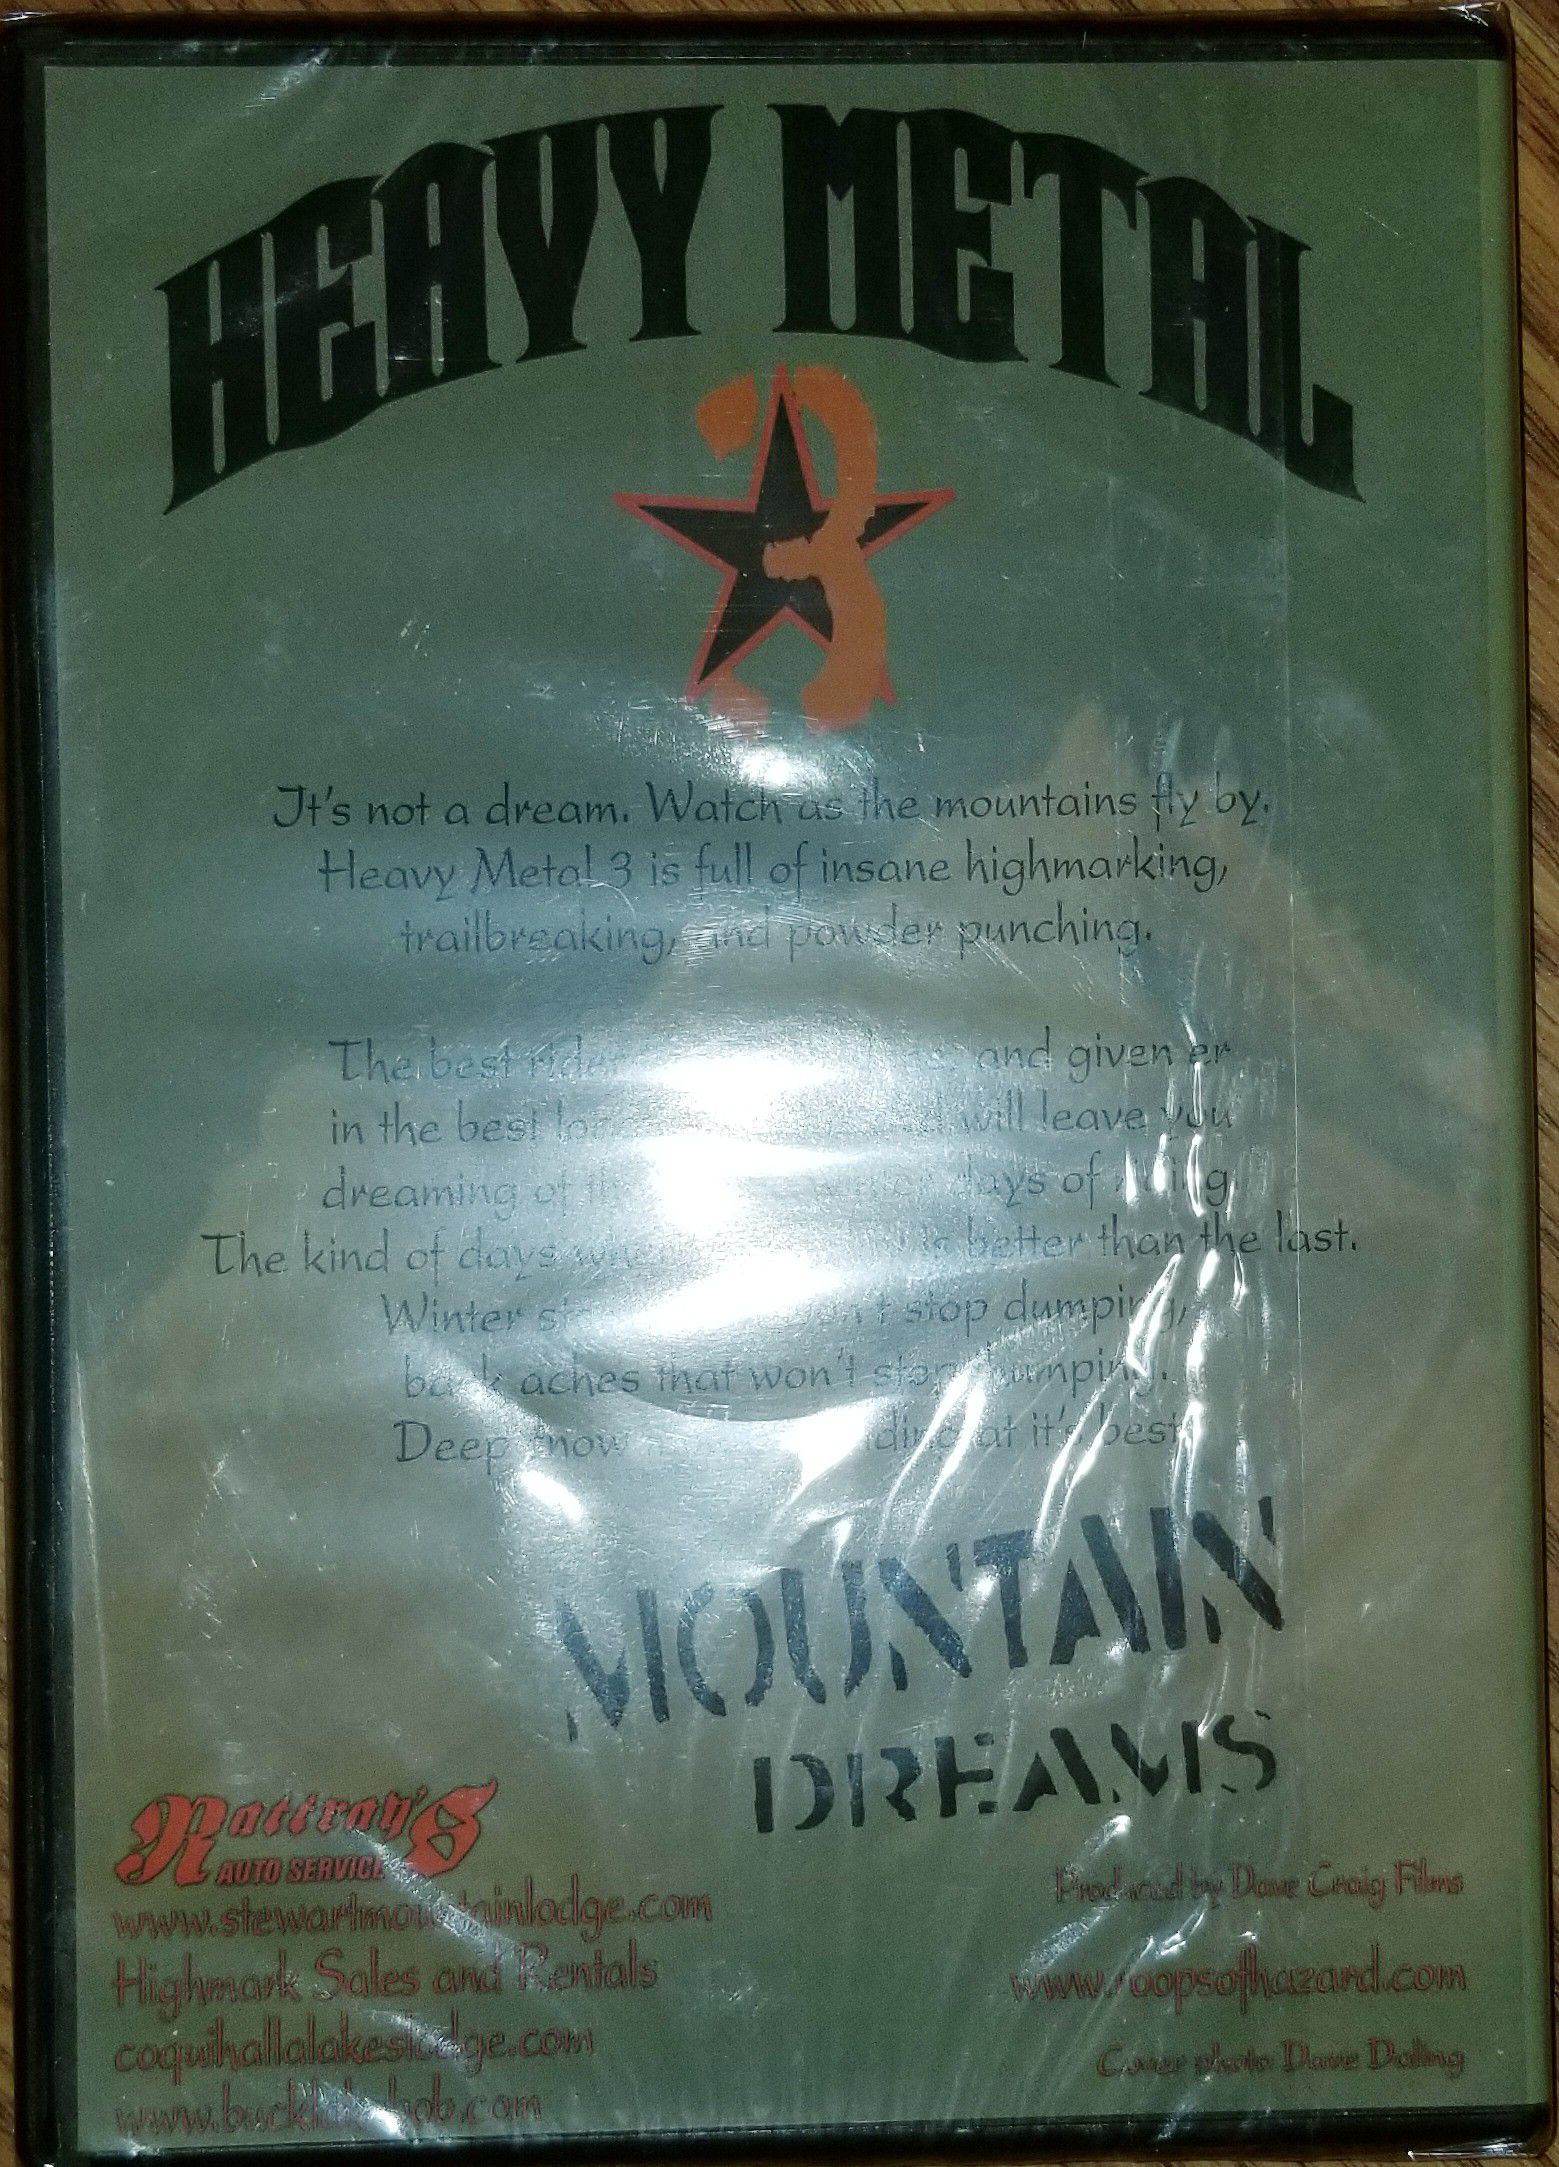 Heavy Metal Mountain Dreams Snowmobile Film